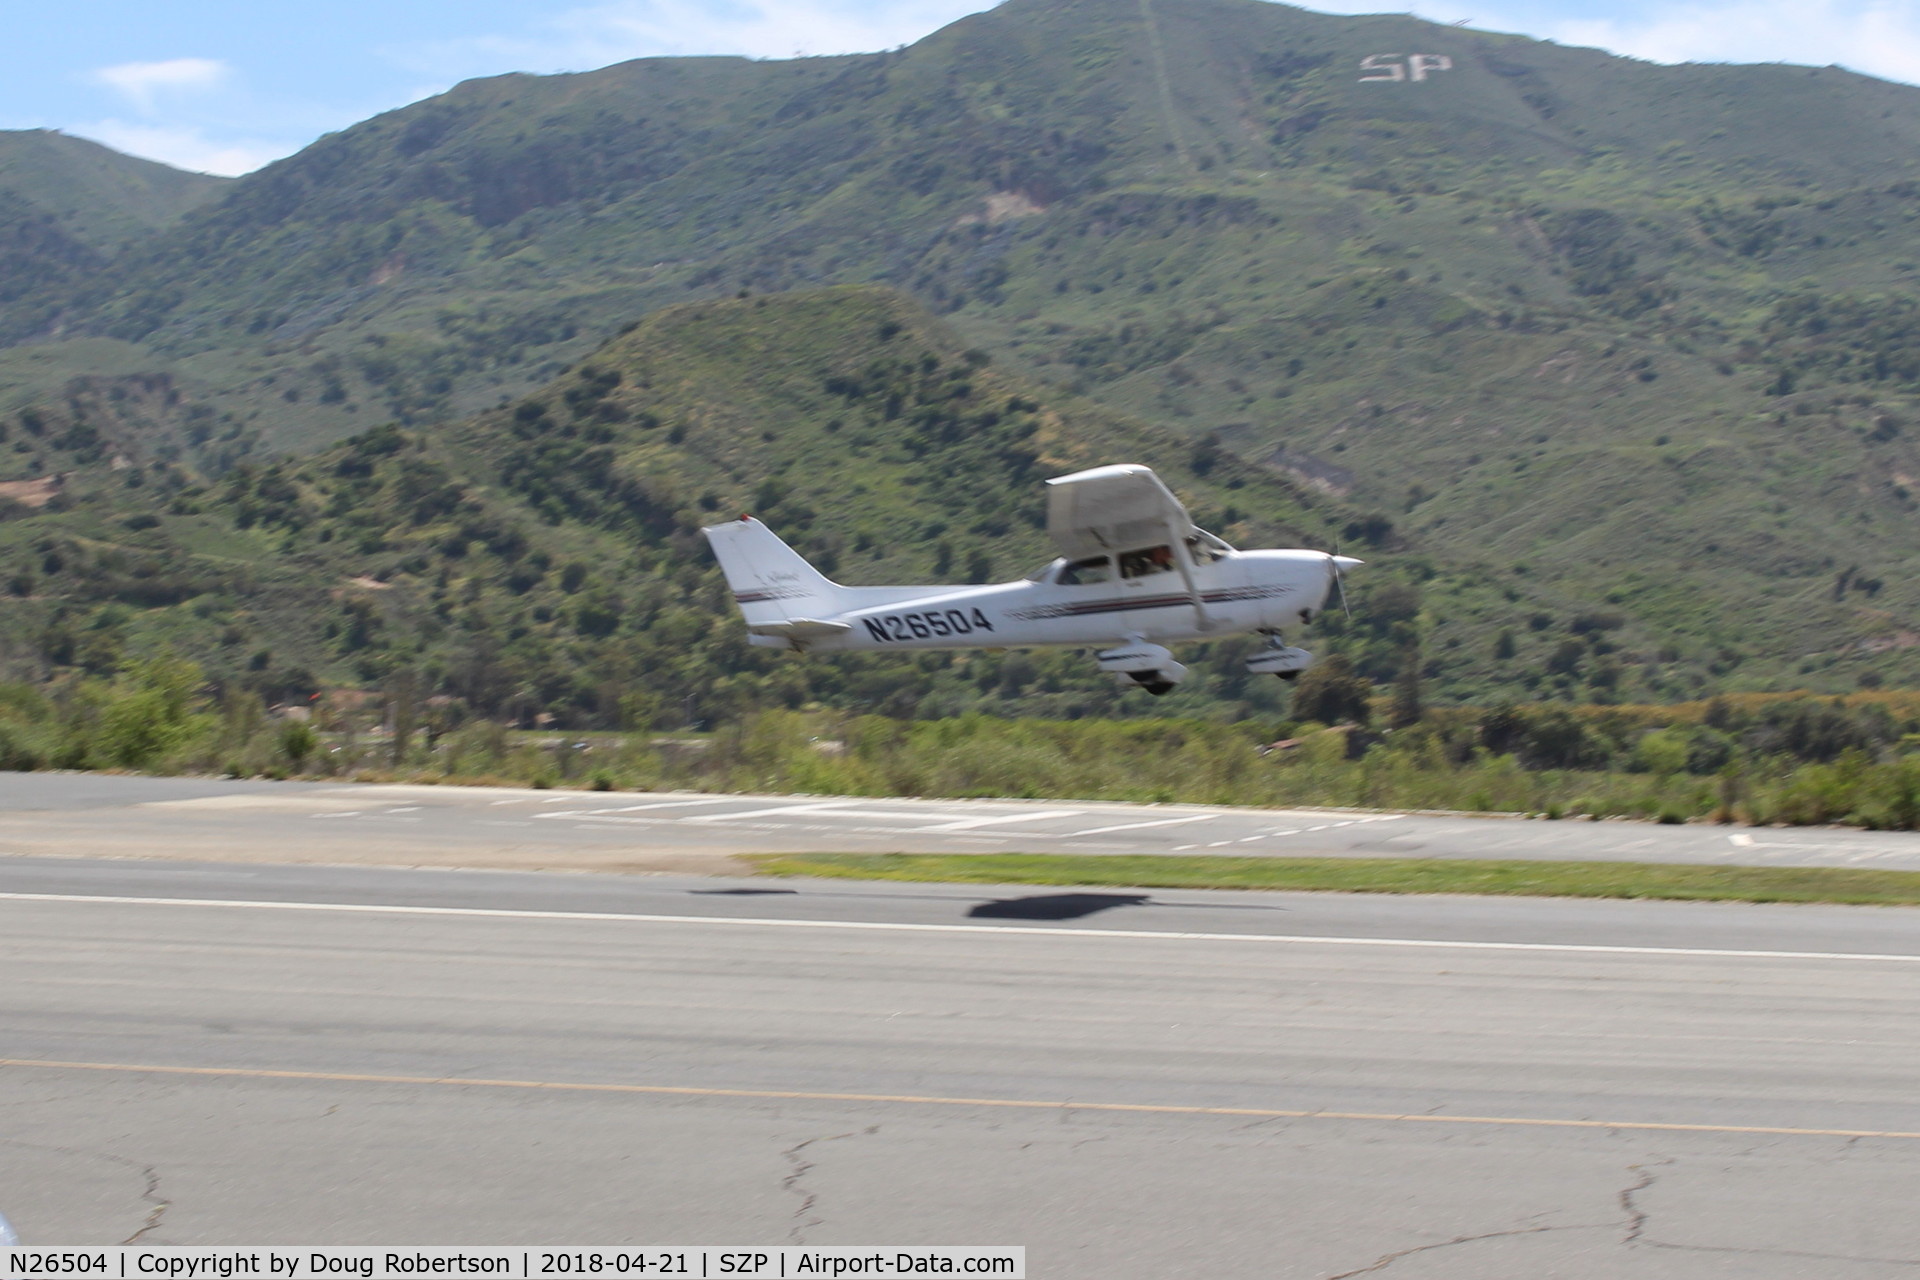 N26504, 1998 Cessna 172R C/N 17280601, 1998 Cessna 172R SKYHAWK, Continental IO-360-L2A 160 Hp, fixed-pitch prop, takeoff climb Rwy 22